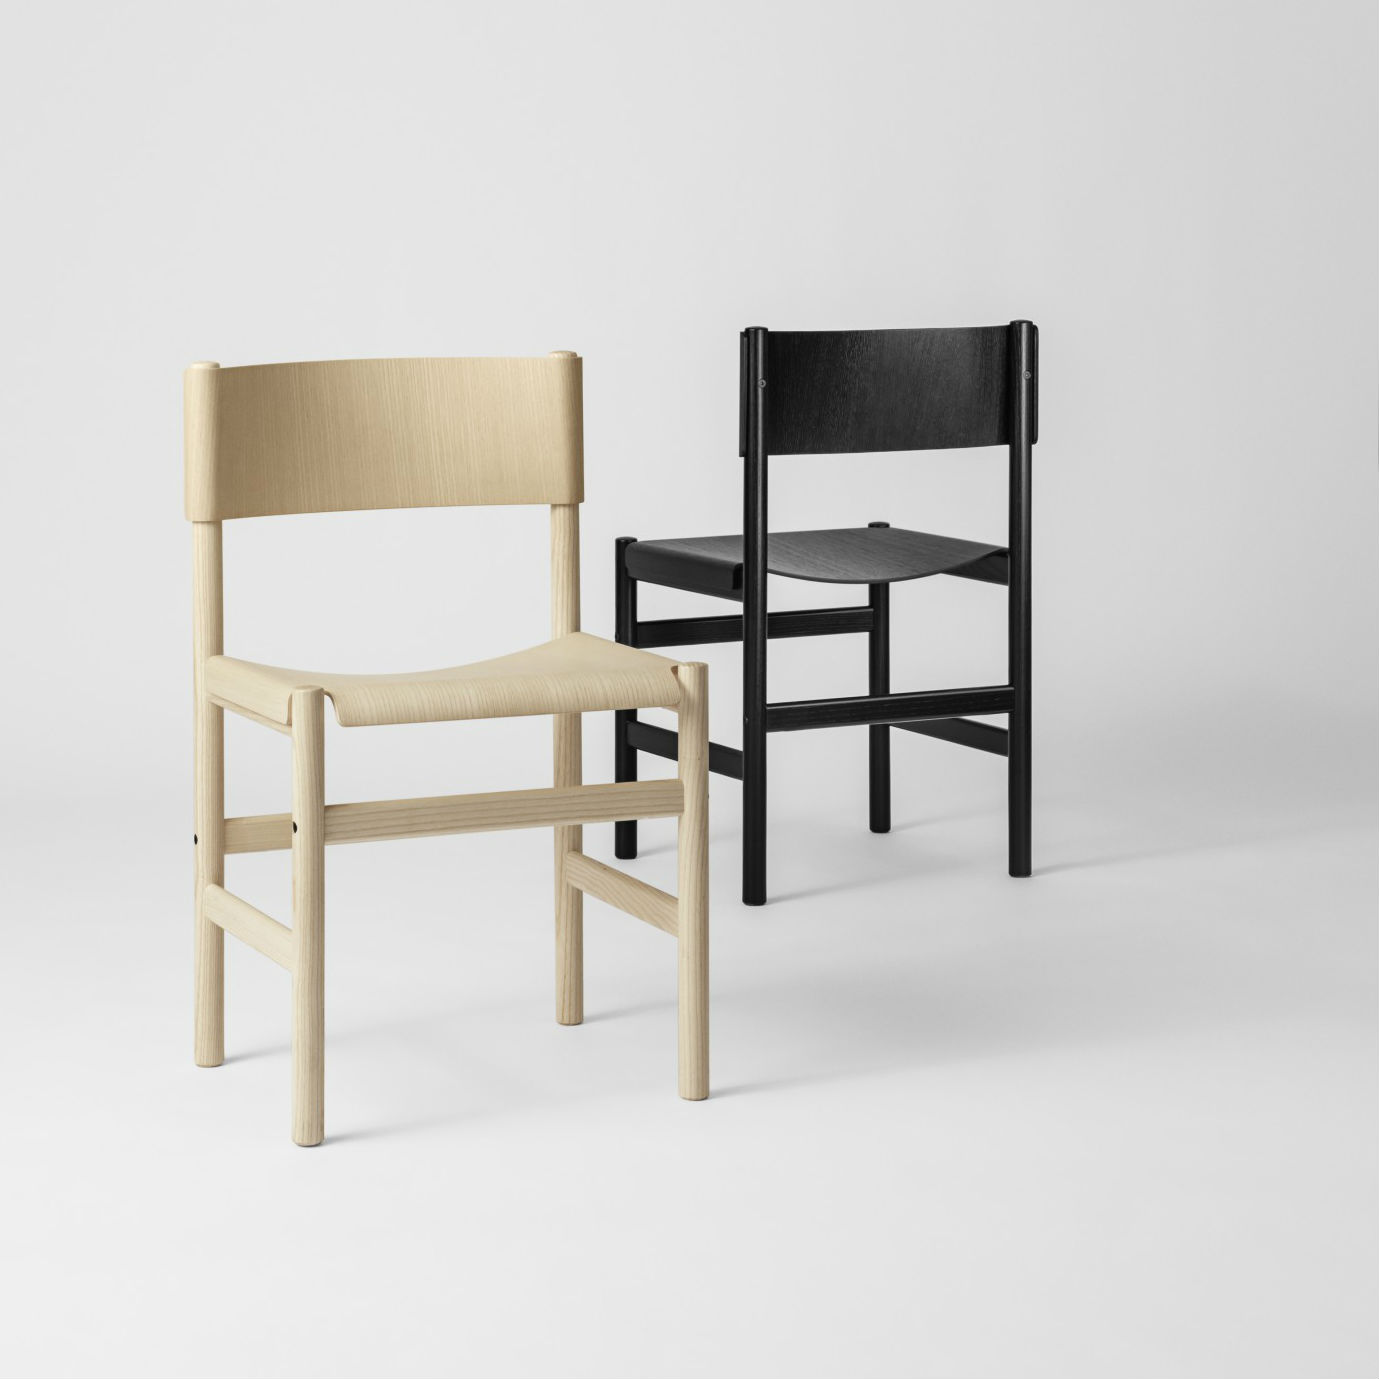 Dezeen Awards 2019 design longlist: T02 Soft Chair by Thomas Bentzen